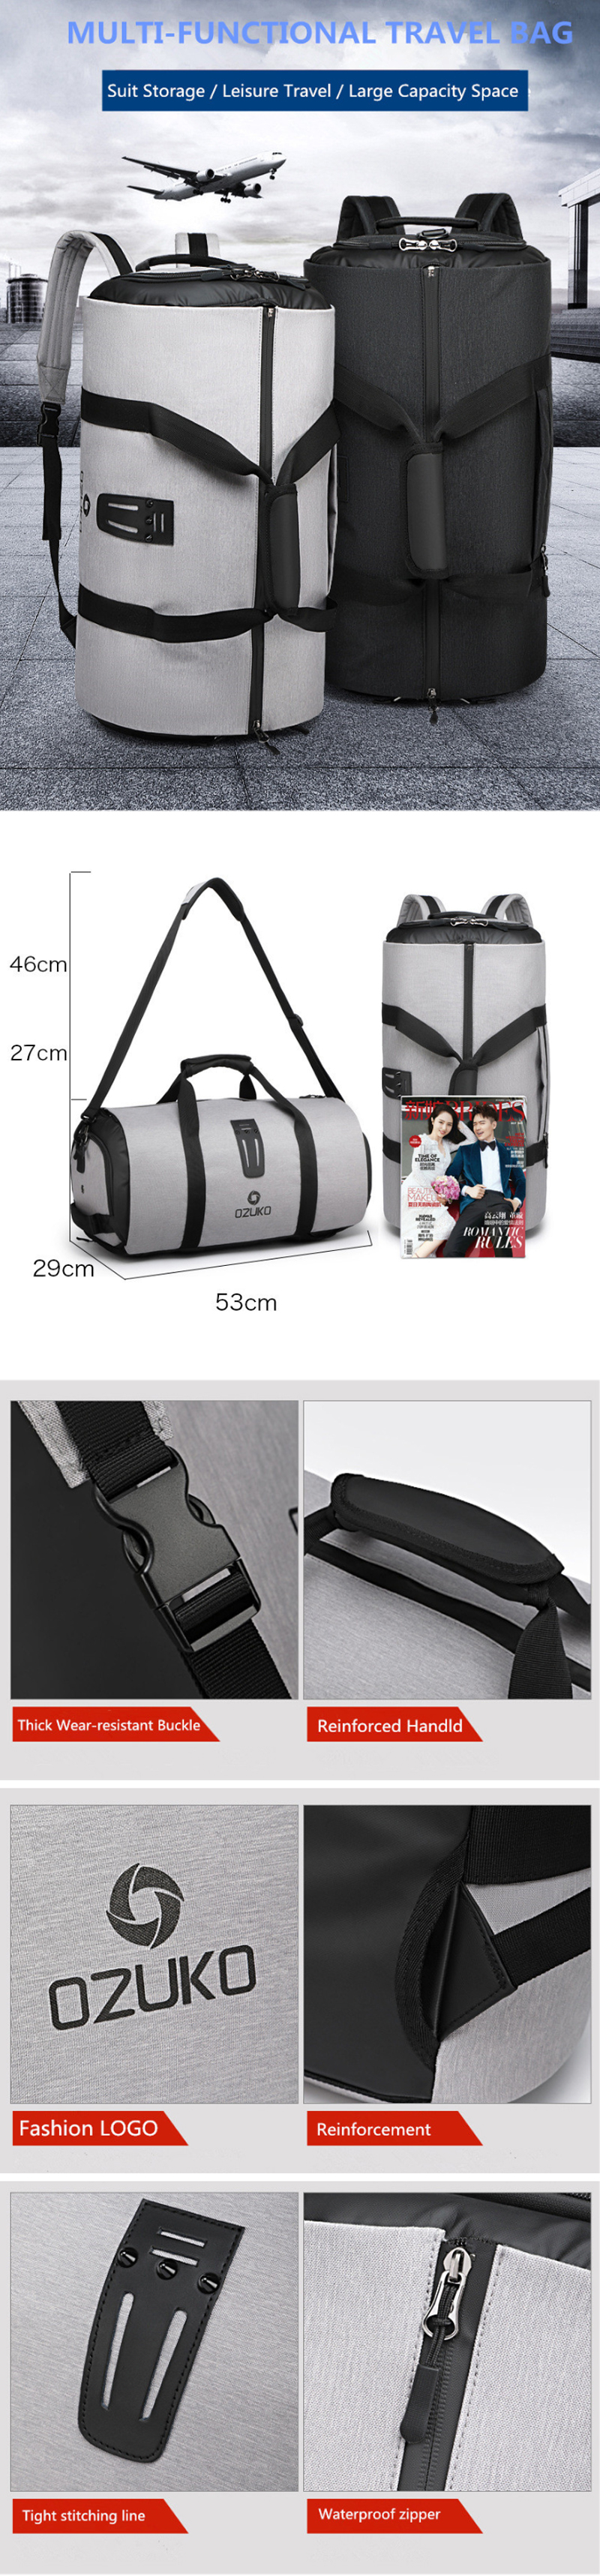 OZUKO-Travel-Luggage-Bag-Duffle-Bag-Suit-Storage-Bag-With-Shoes-Bag-1643874-1